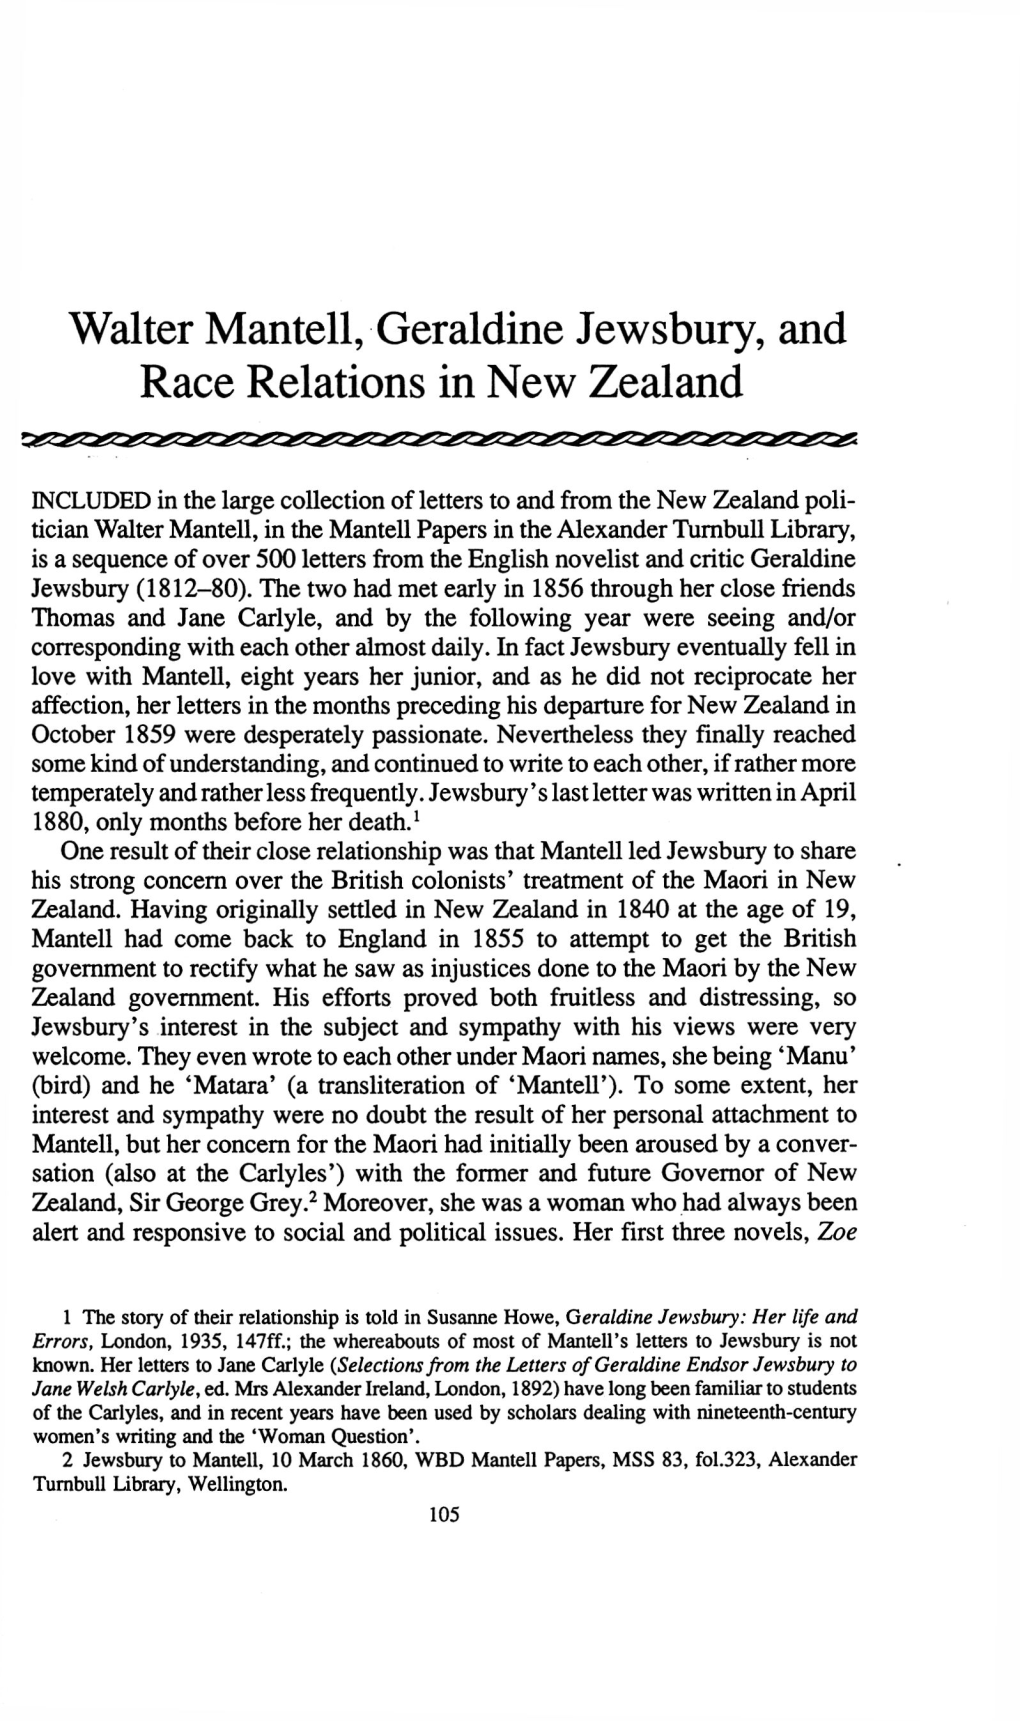 Walter Mantell, Geraldine Jewsbury, and Race Relations in New Zealand